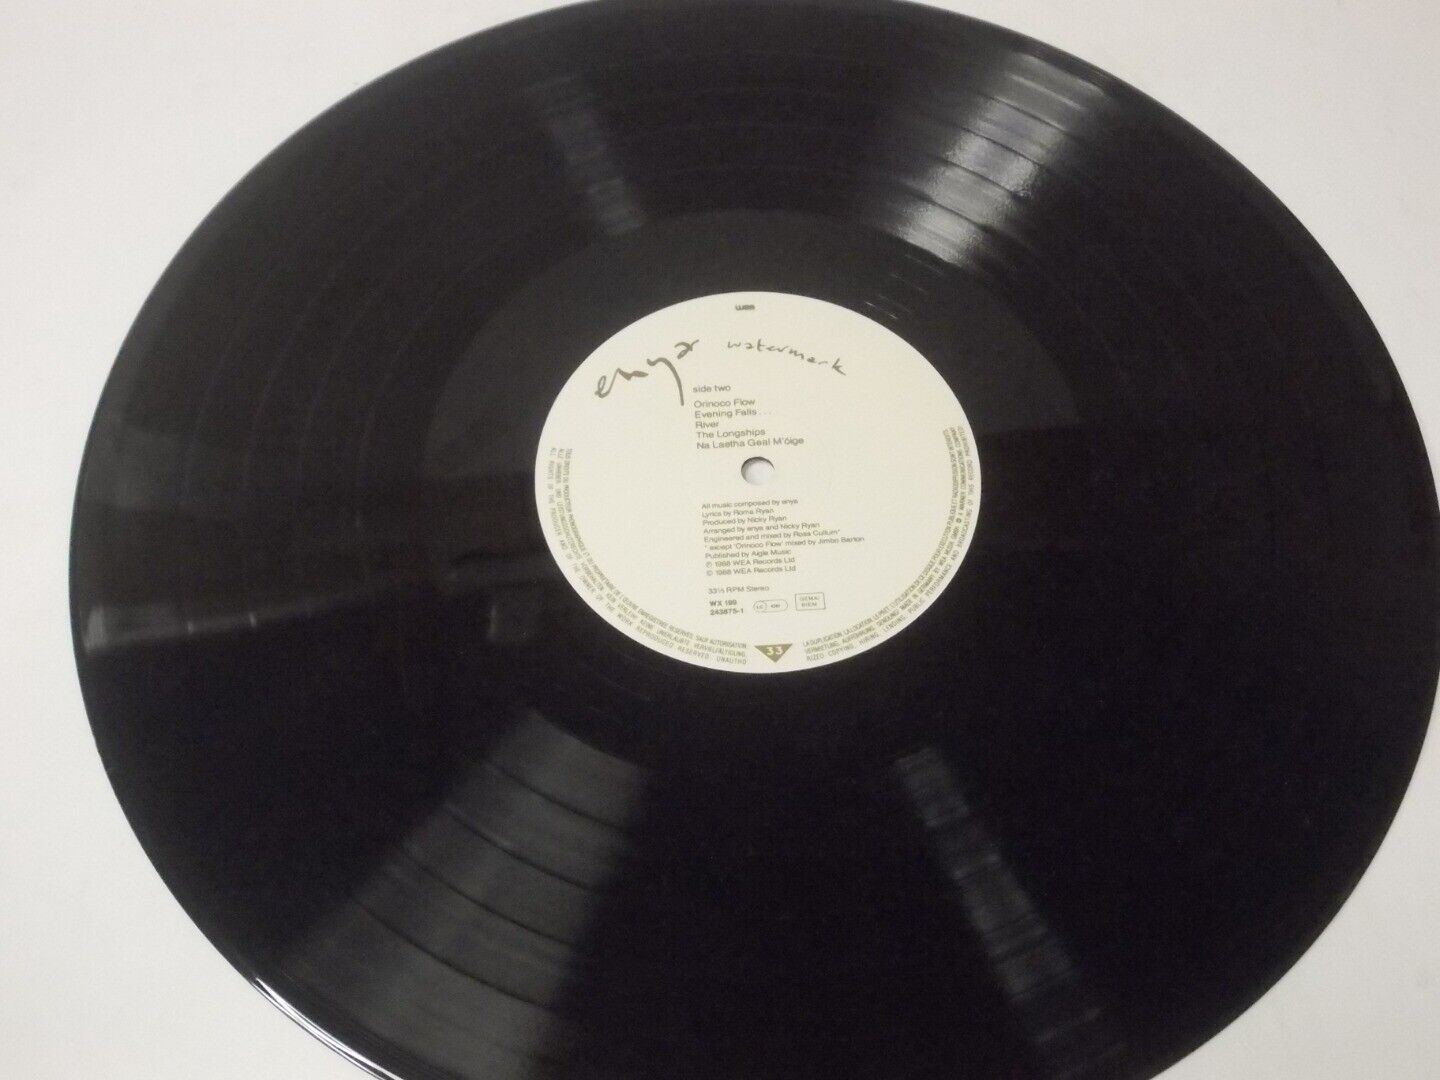 Enya Watermark Vinyl Record UK: WX 199 243875 243875-4 243875-2 WE 381 LG 4281